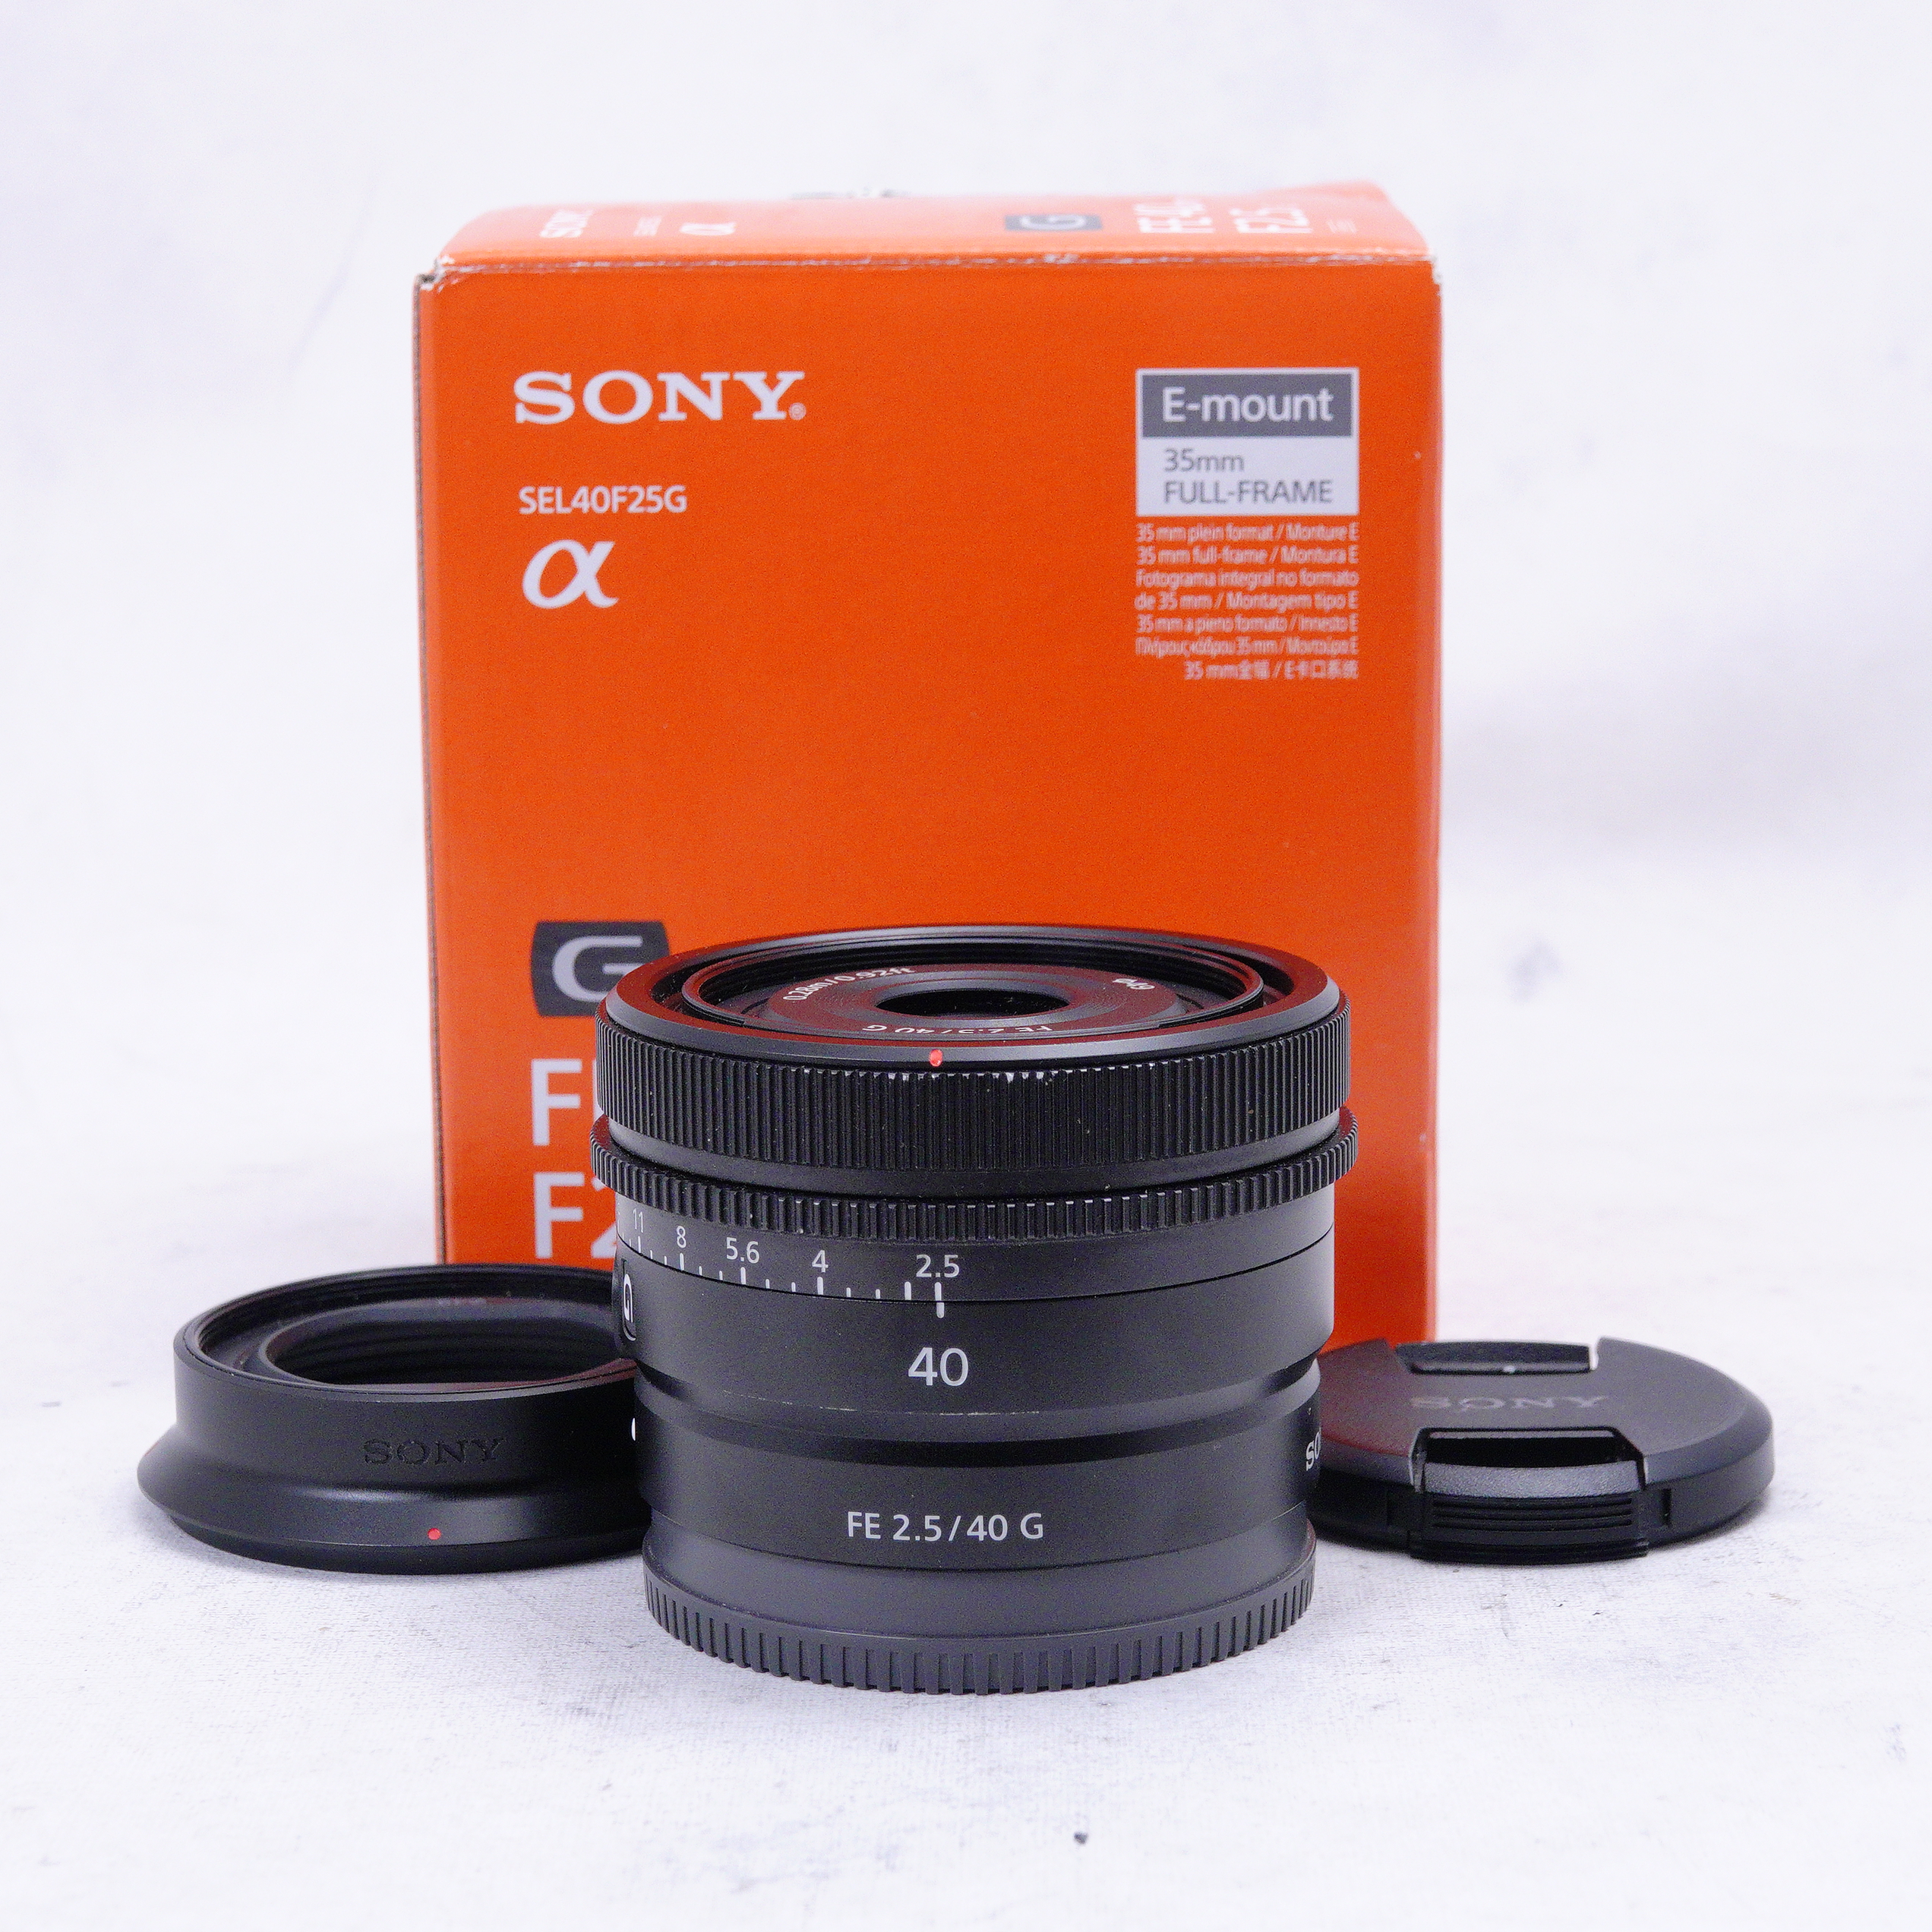 Lente Sony FE 40mm f2.5 G - Usado